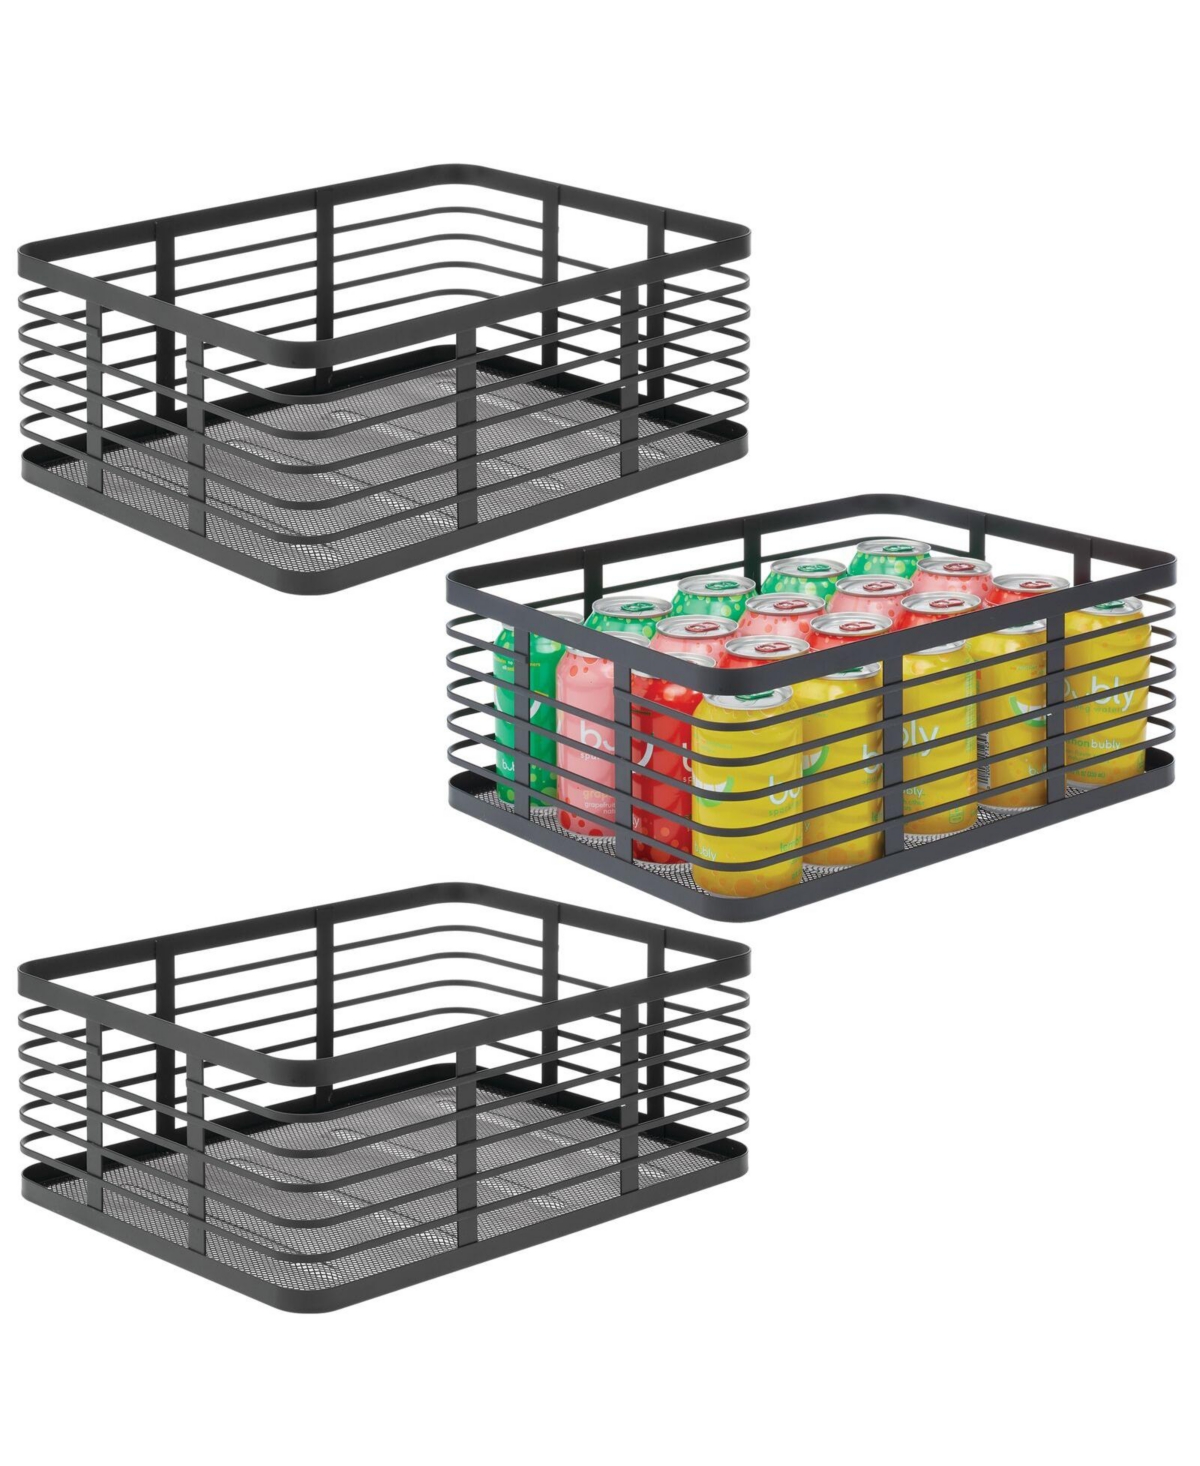 Large Steel Metal Kitchen Organizer Basket, Handles, 3 Pack - Black